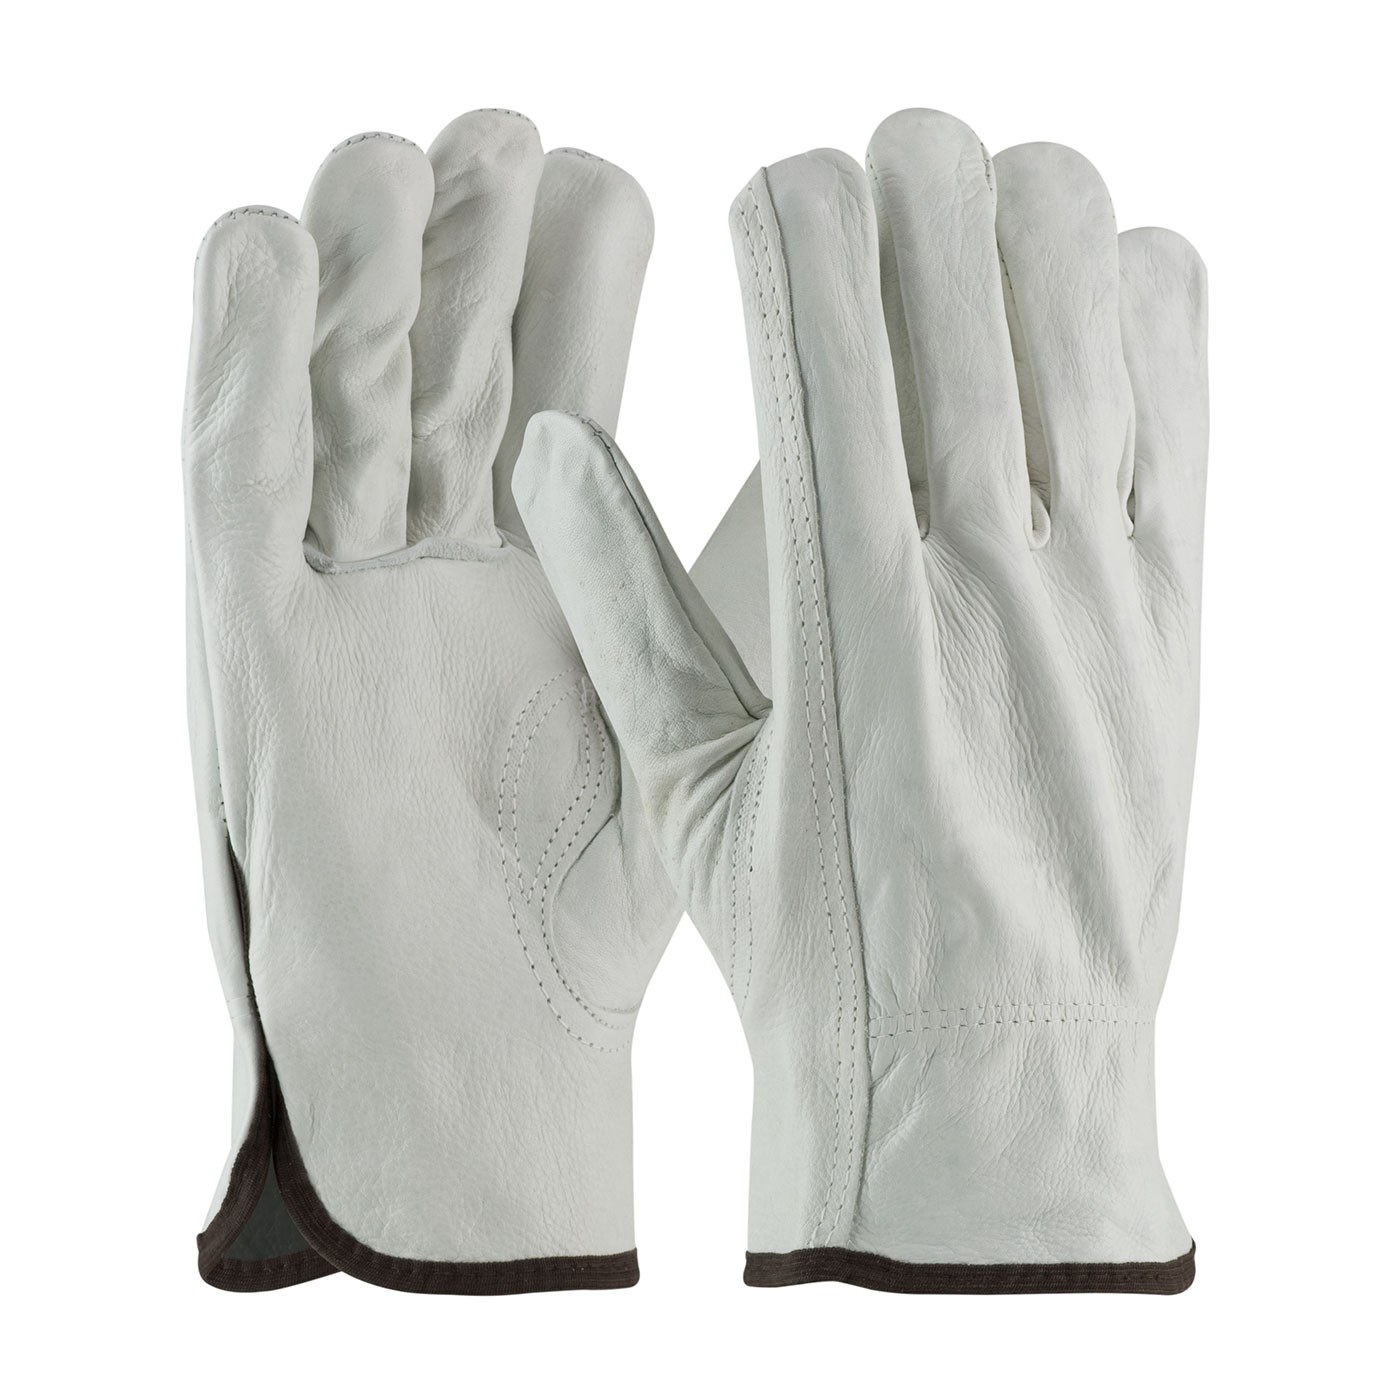 PIP® Regular Grade Top Grain Cowhide Leather Drivers Glove - Keystone Thumb  (#68-163)